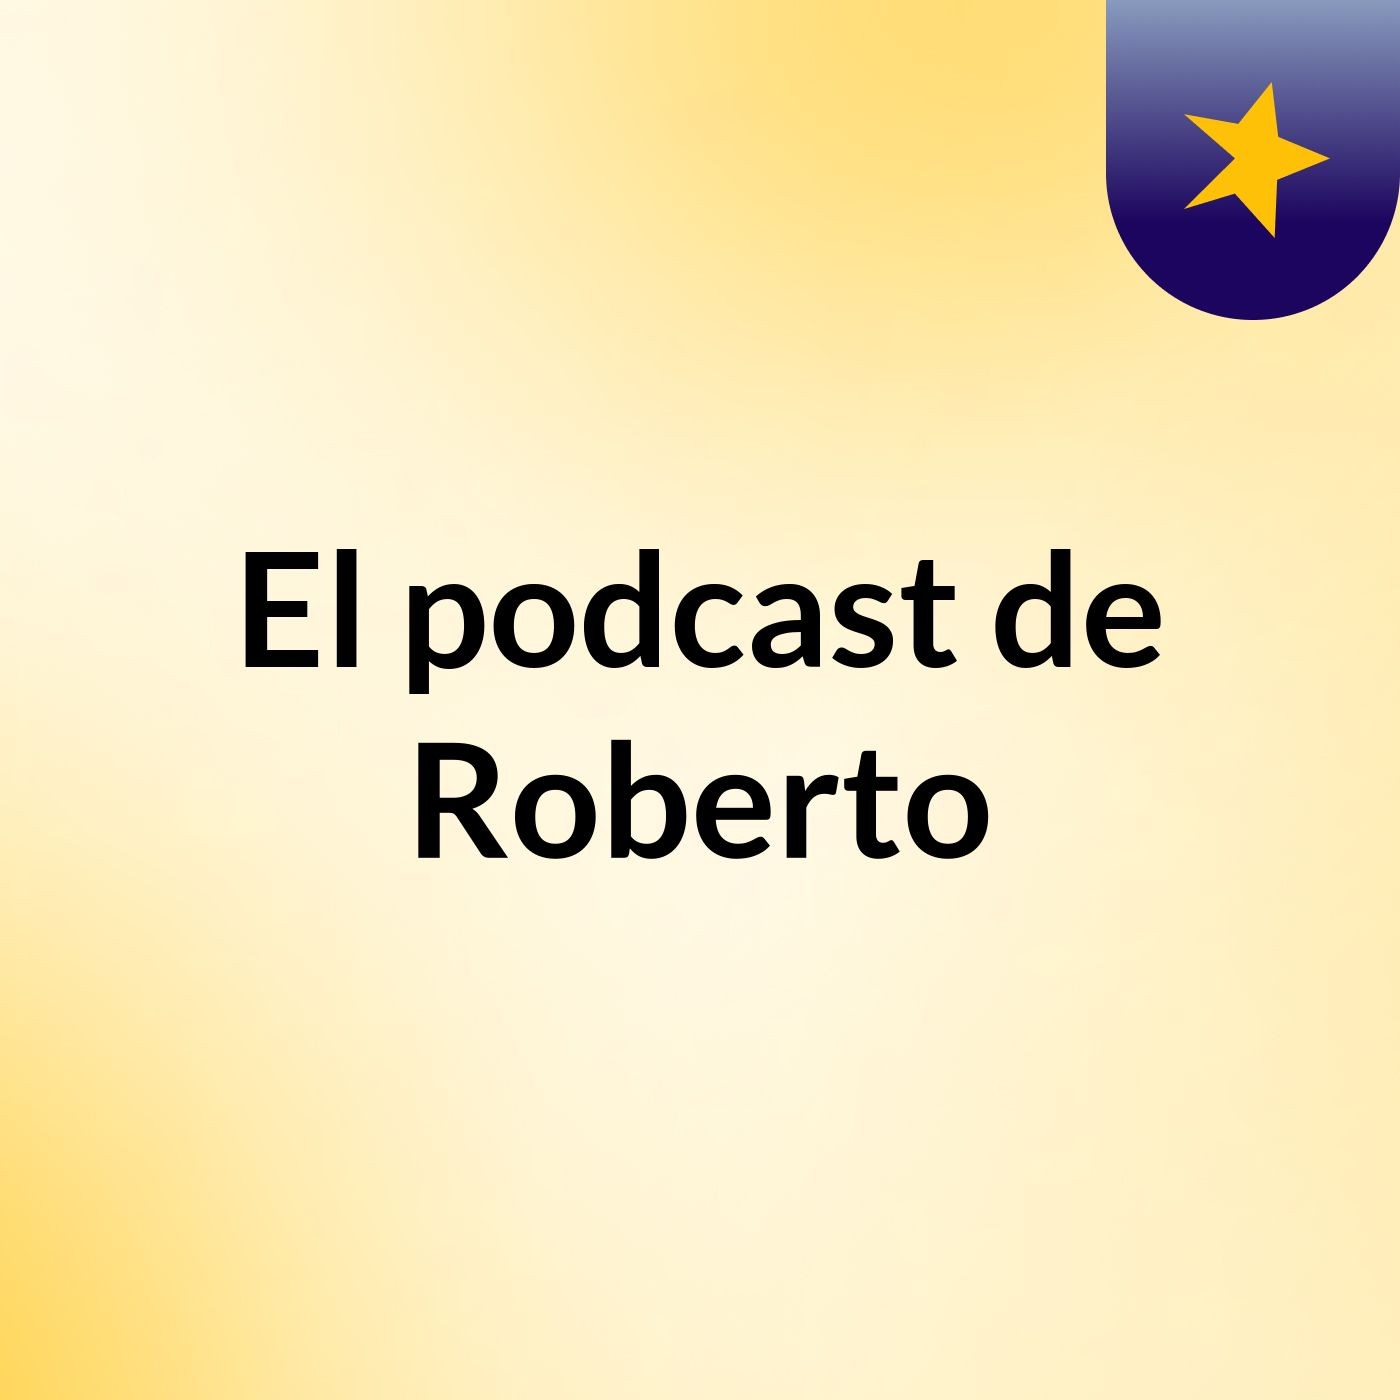 El podcast de Roberto